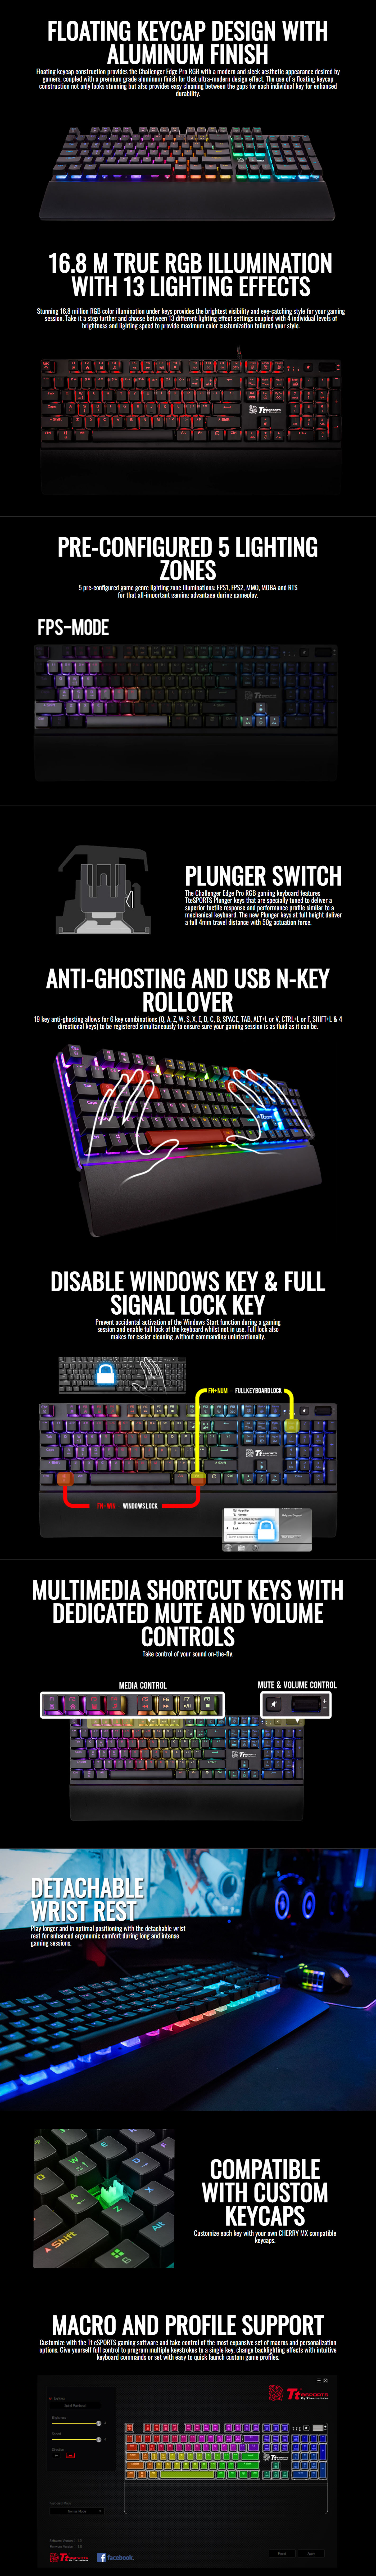 Keyboards-Tt-eSPORTS-Challenger-Edge-Pro-RGB-Gaming-Keyboard-1